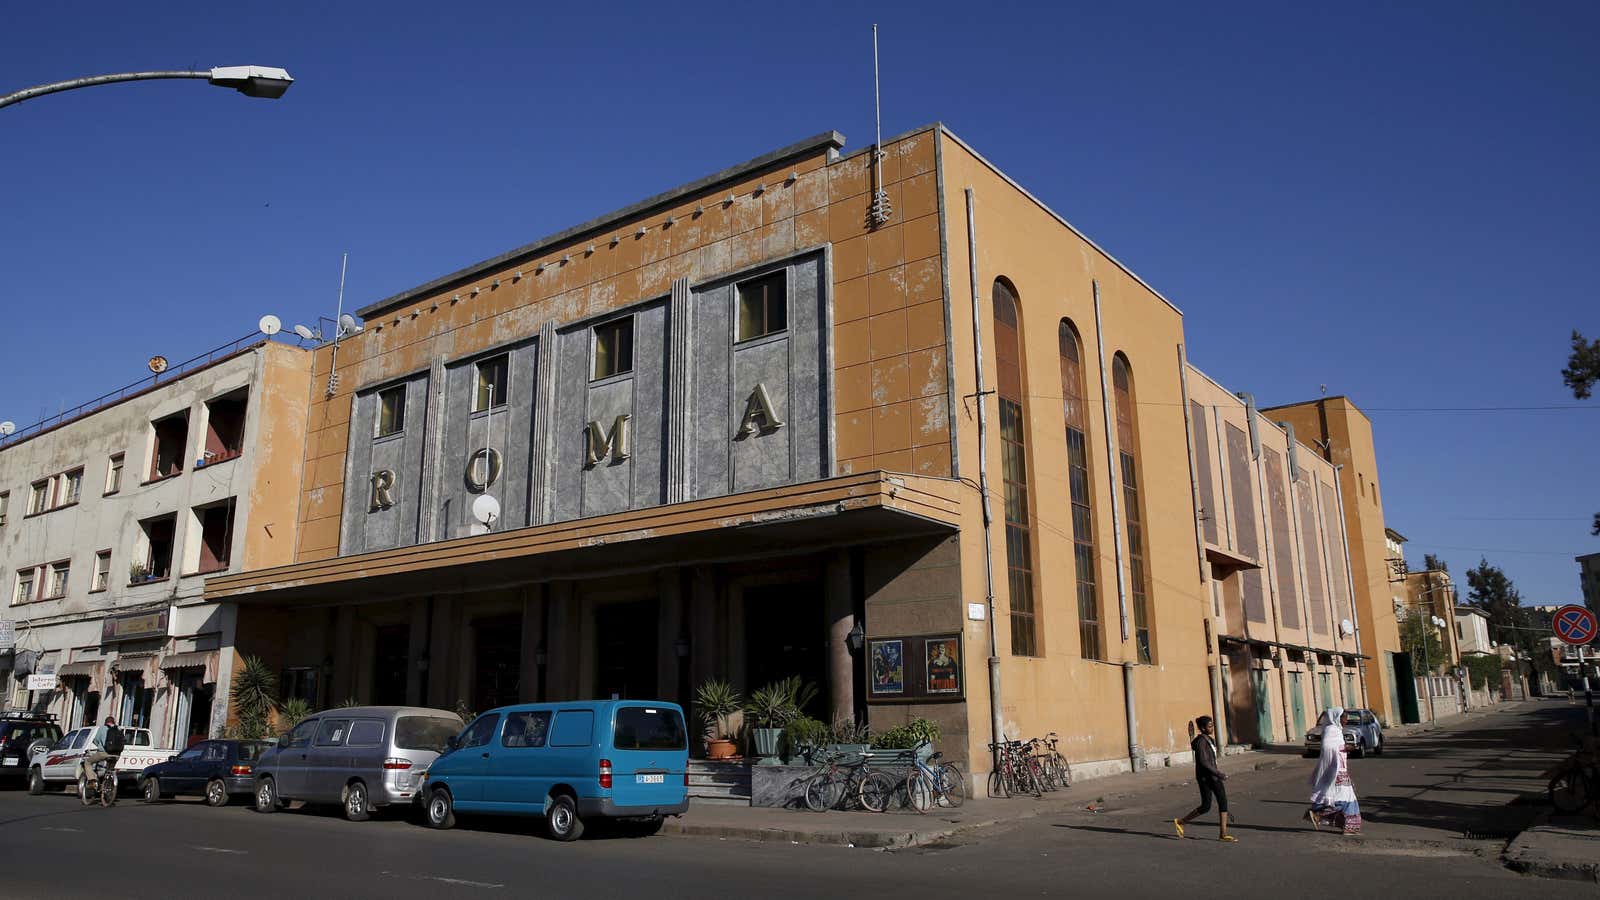 Roma Cinema in Asmara. The city is sometimes called “La Piccola Roma” or “Little Rome”.